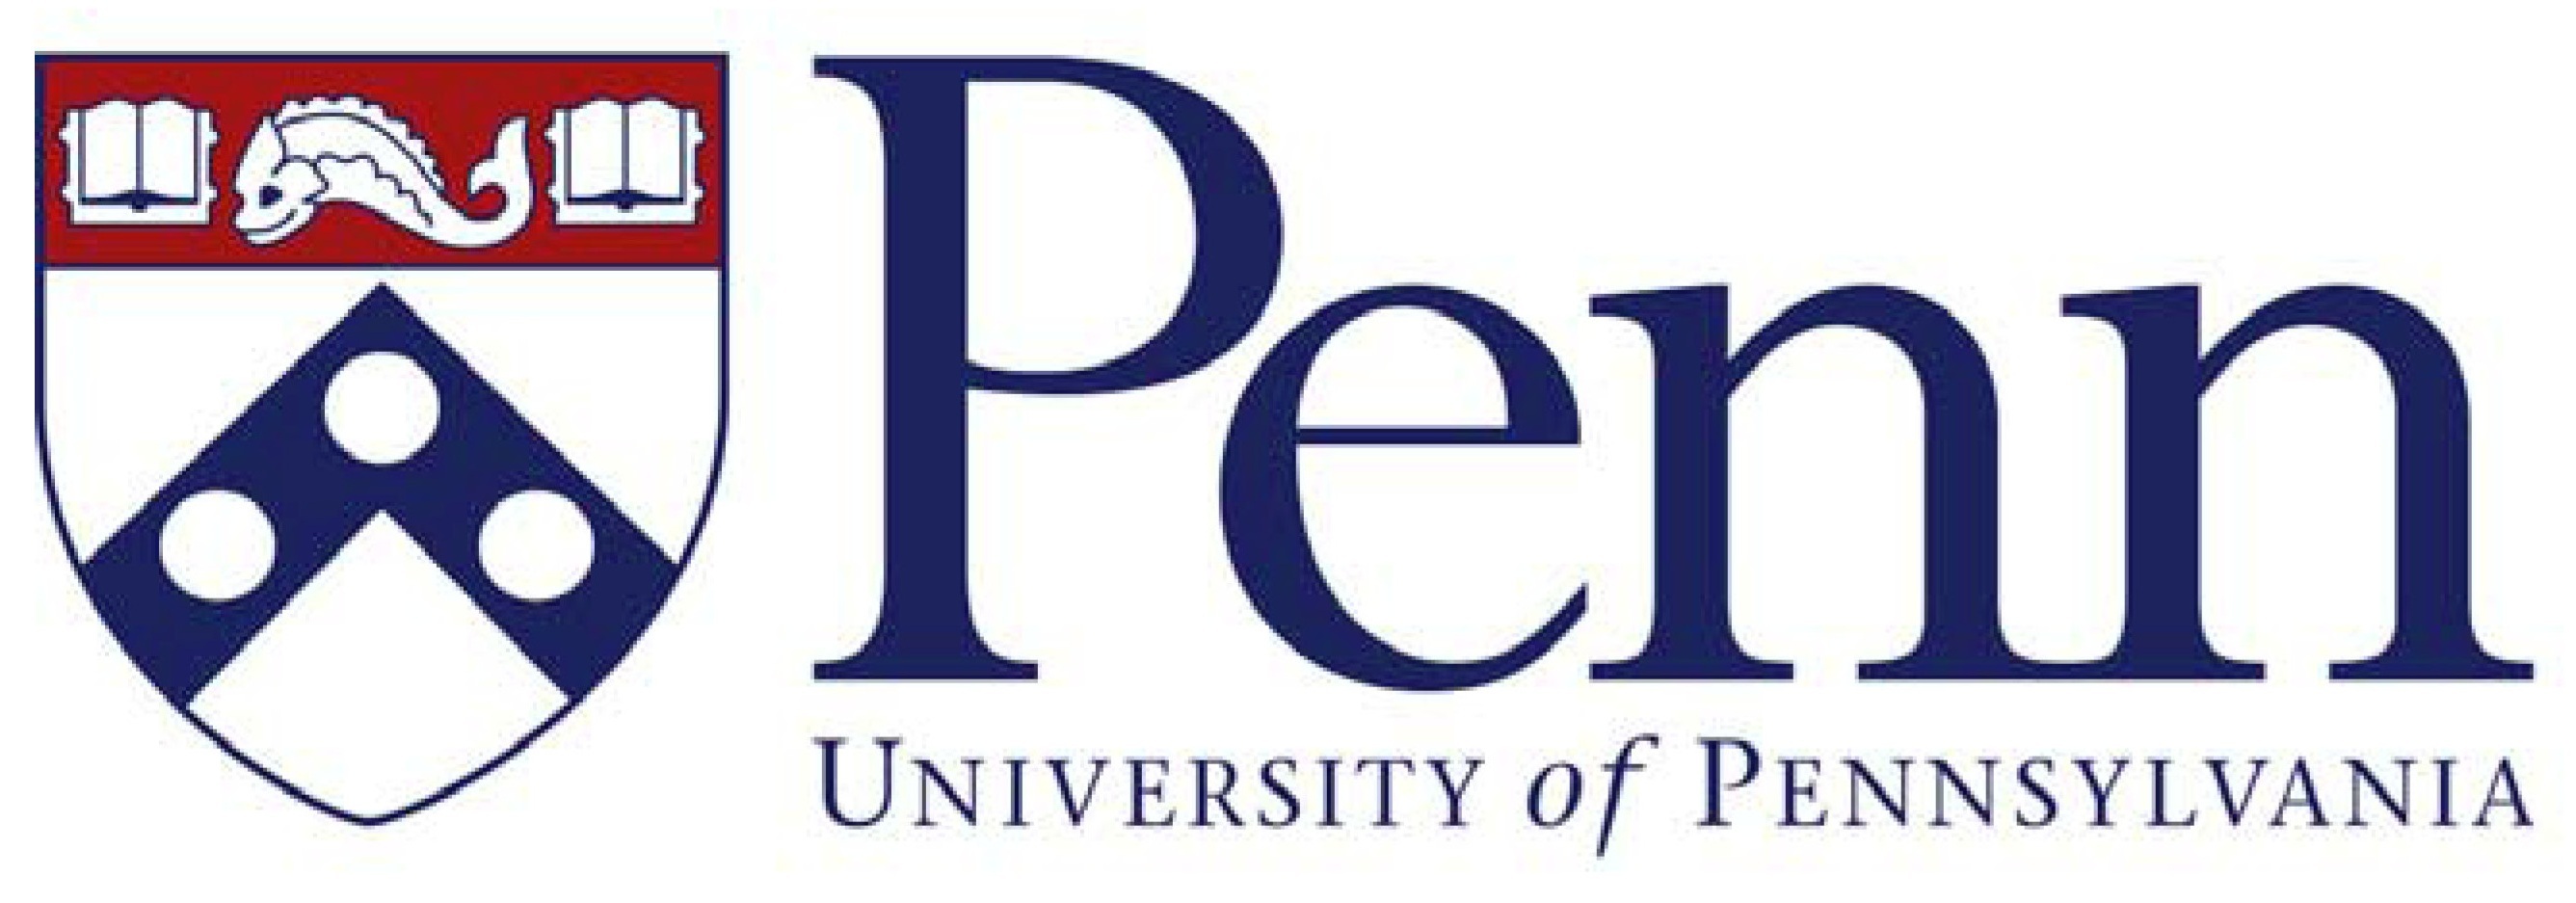 University Of Pennsylvania School Of Nursing Graduate Programs